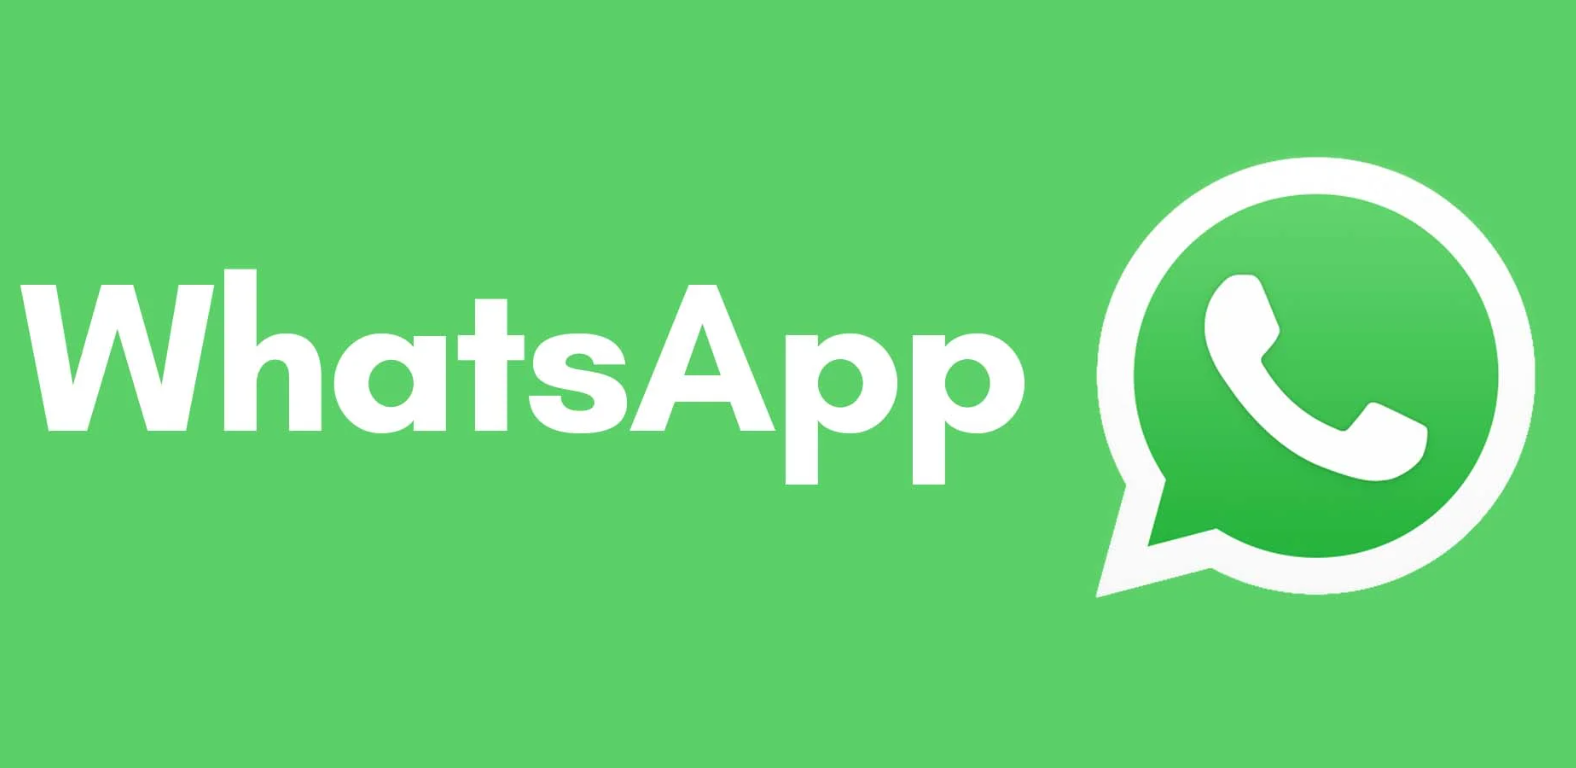 WhatsApp Web: The Desktop Solution